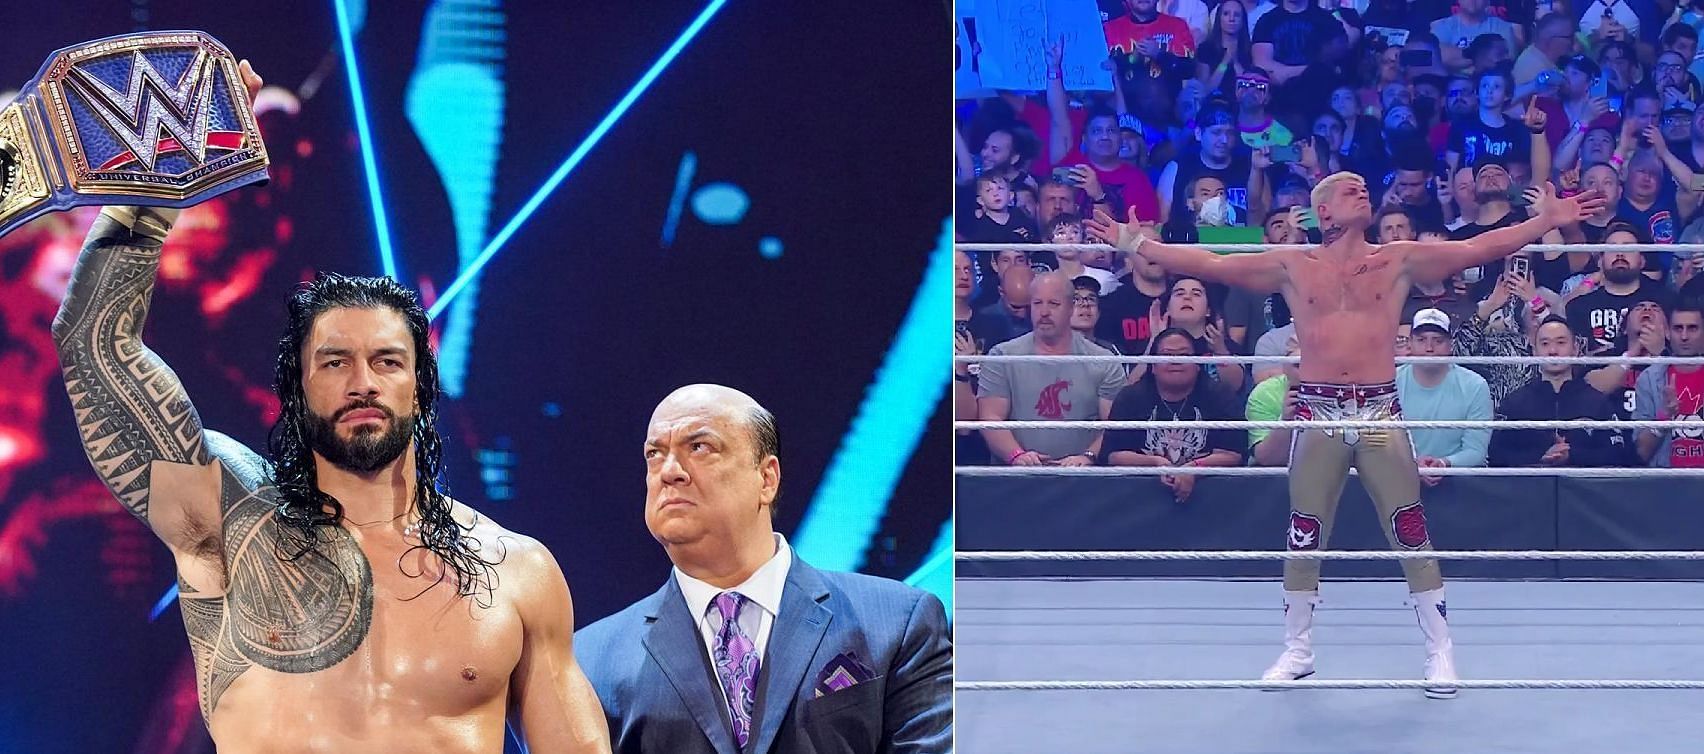 Will Randy Orton make his return at WrestleMania?